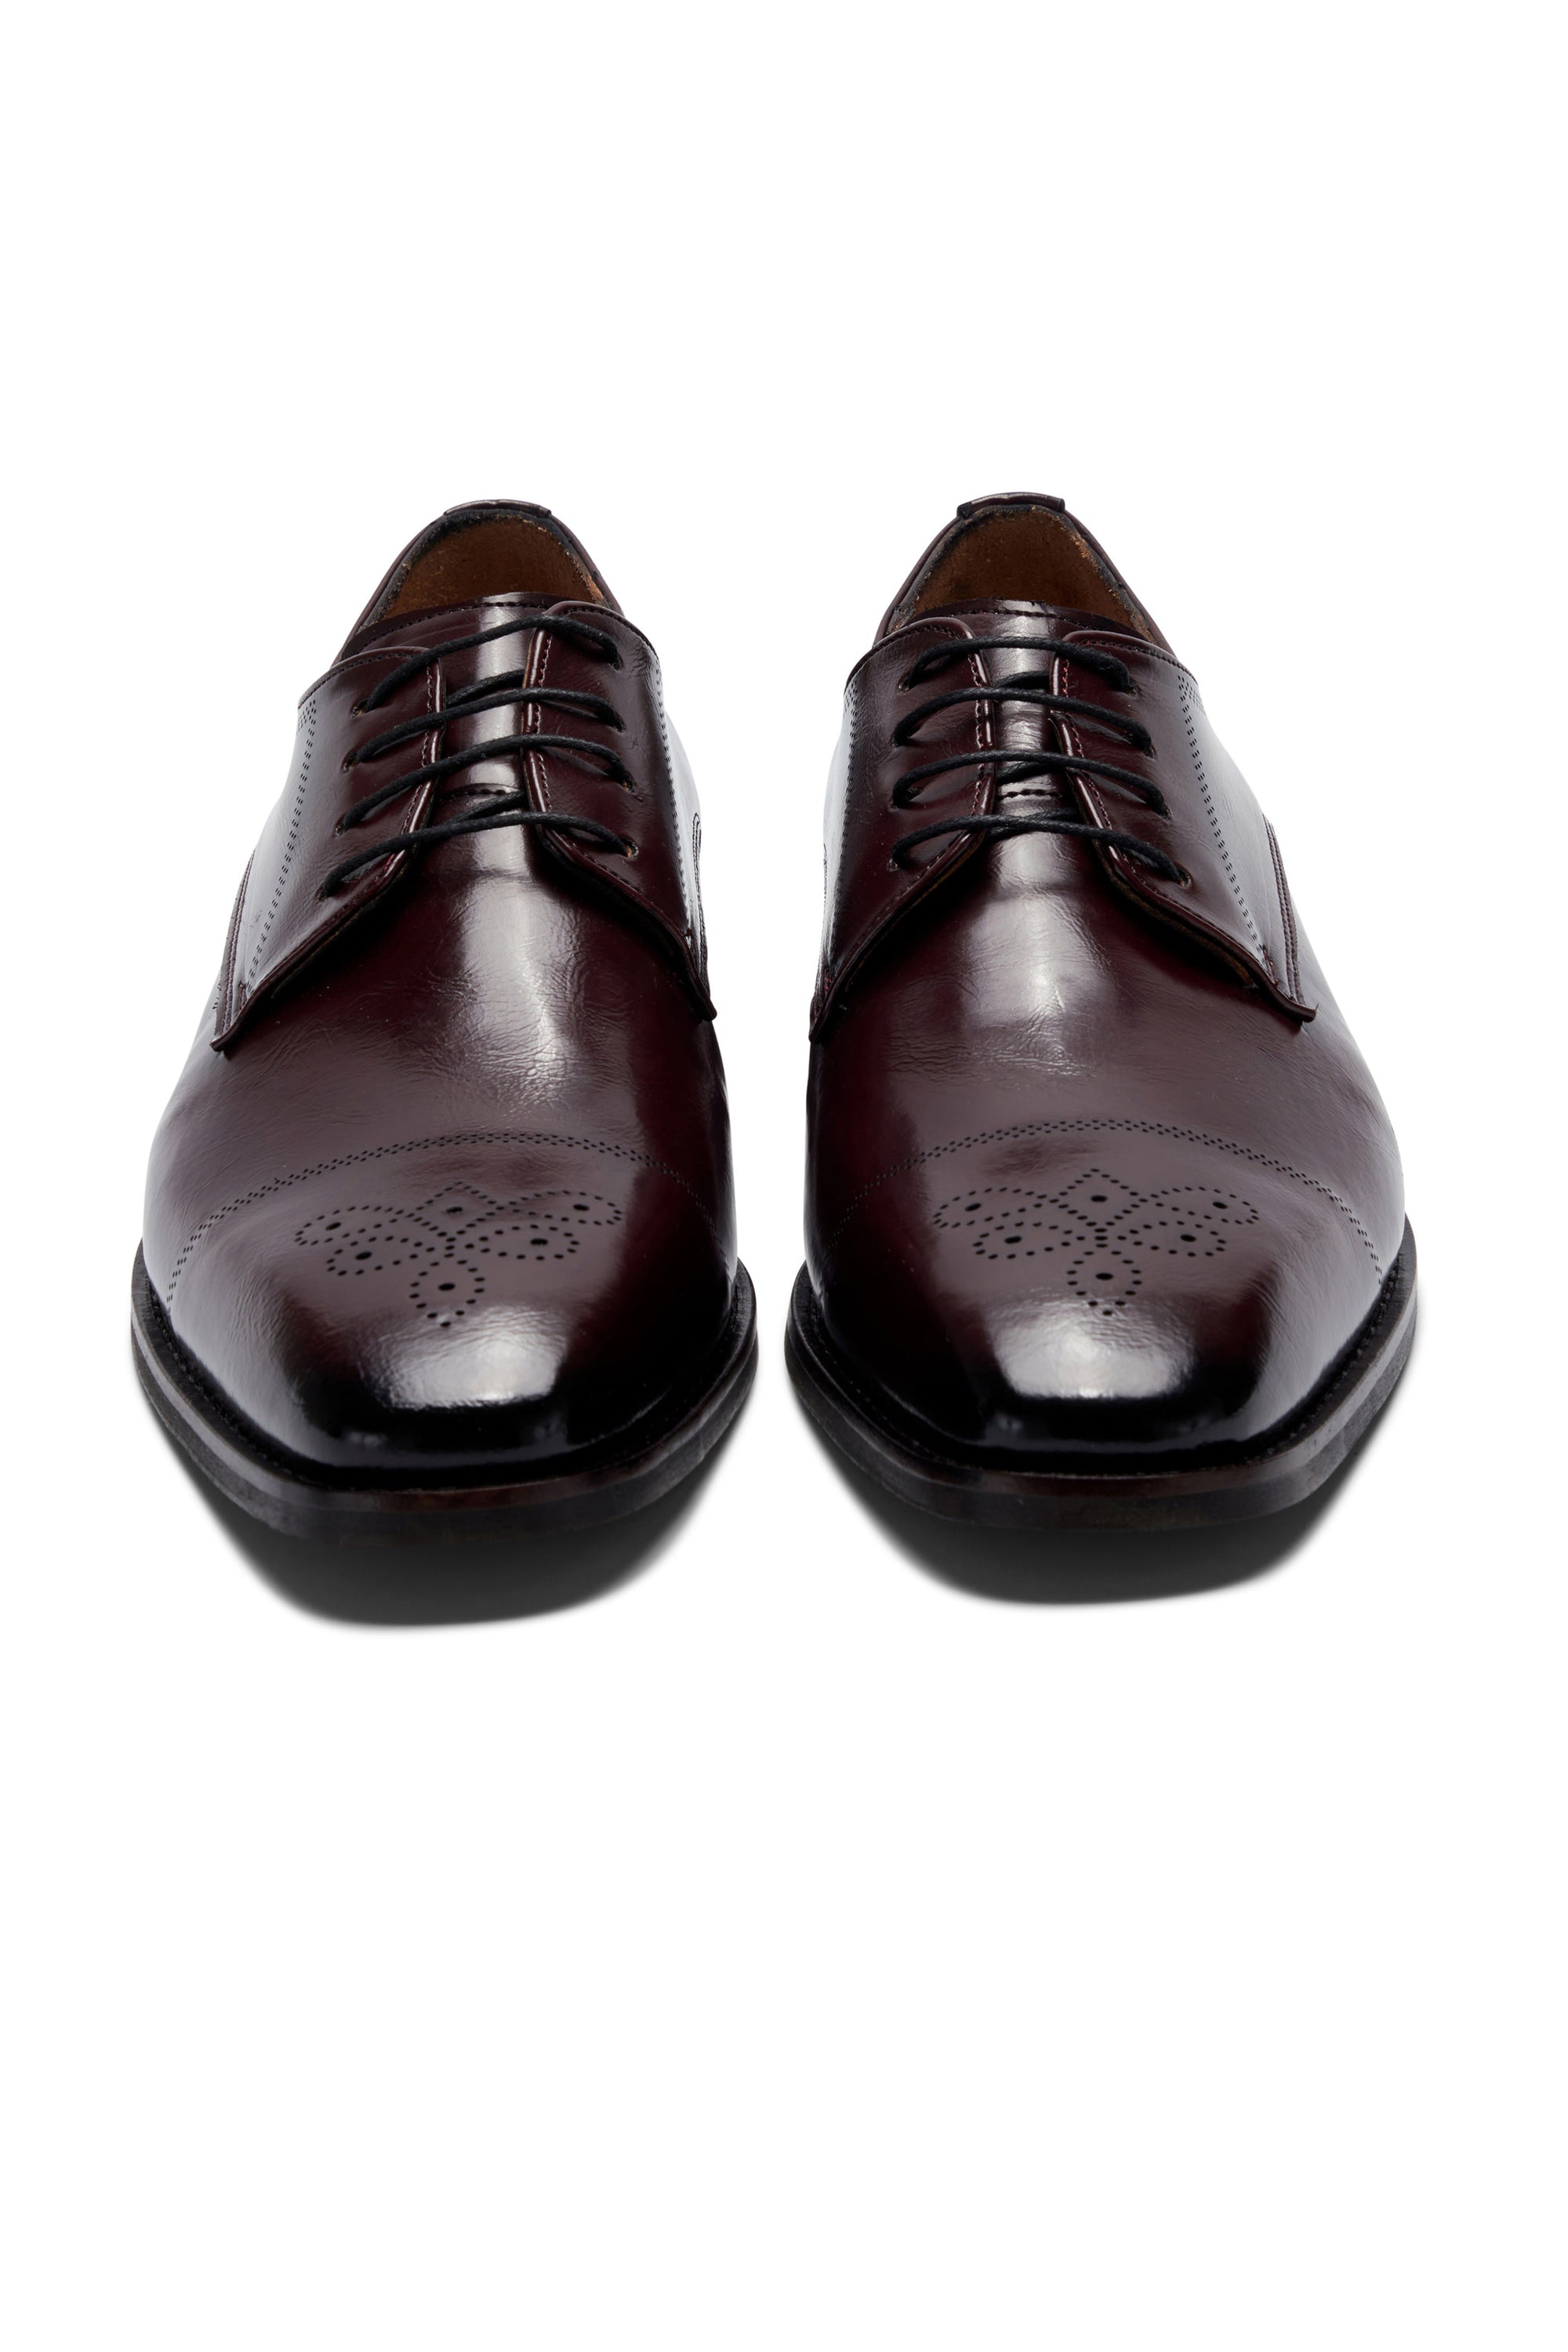 Louis Burgundy Formal Mens Shoe